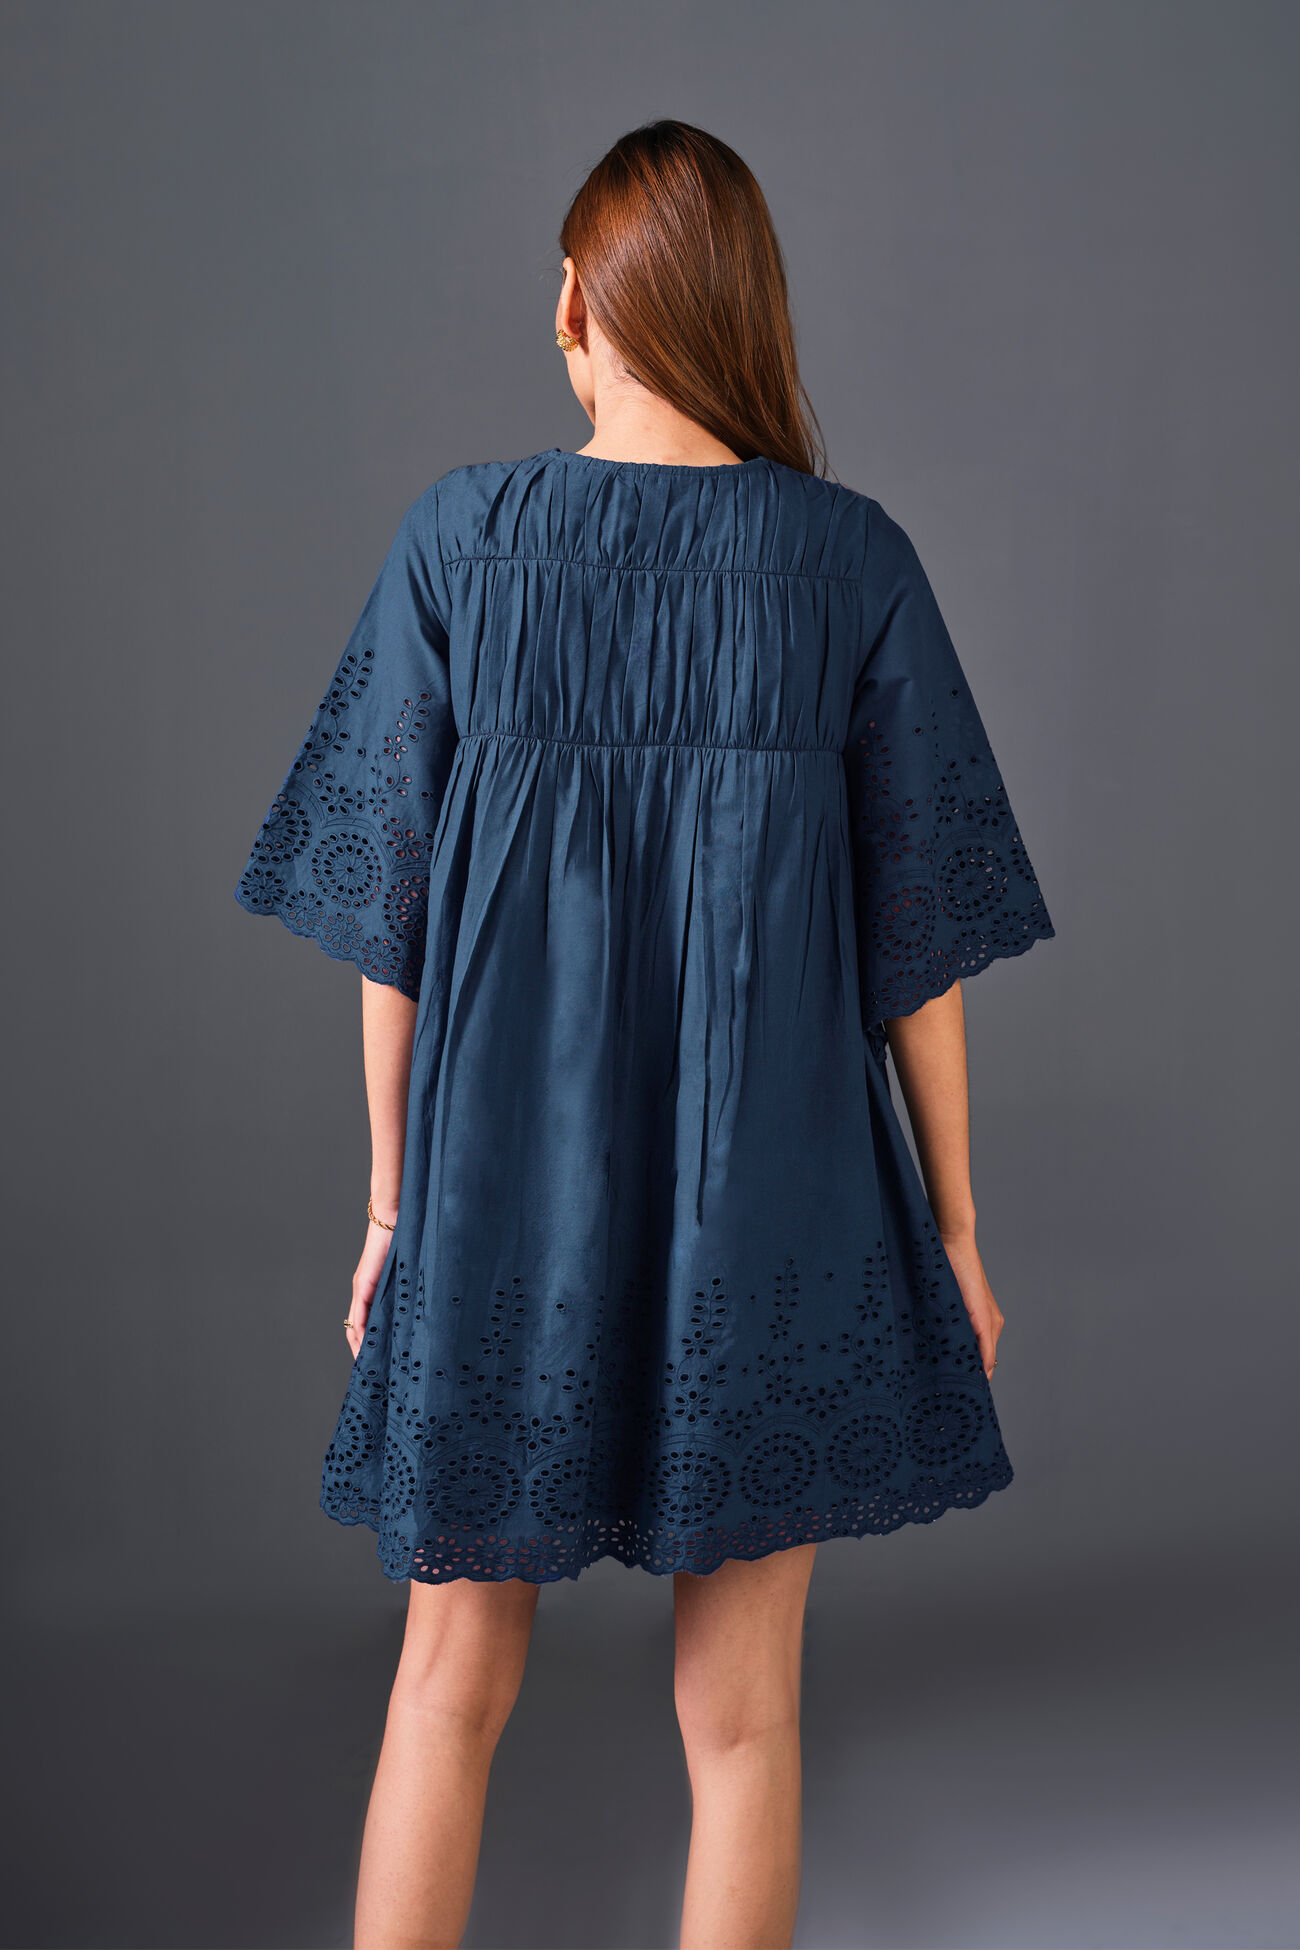 Breezy Fling Cotton Dress, Navy Blue, image 6